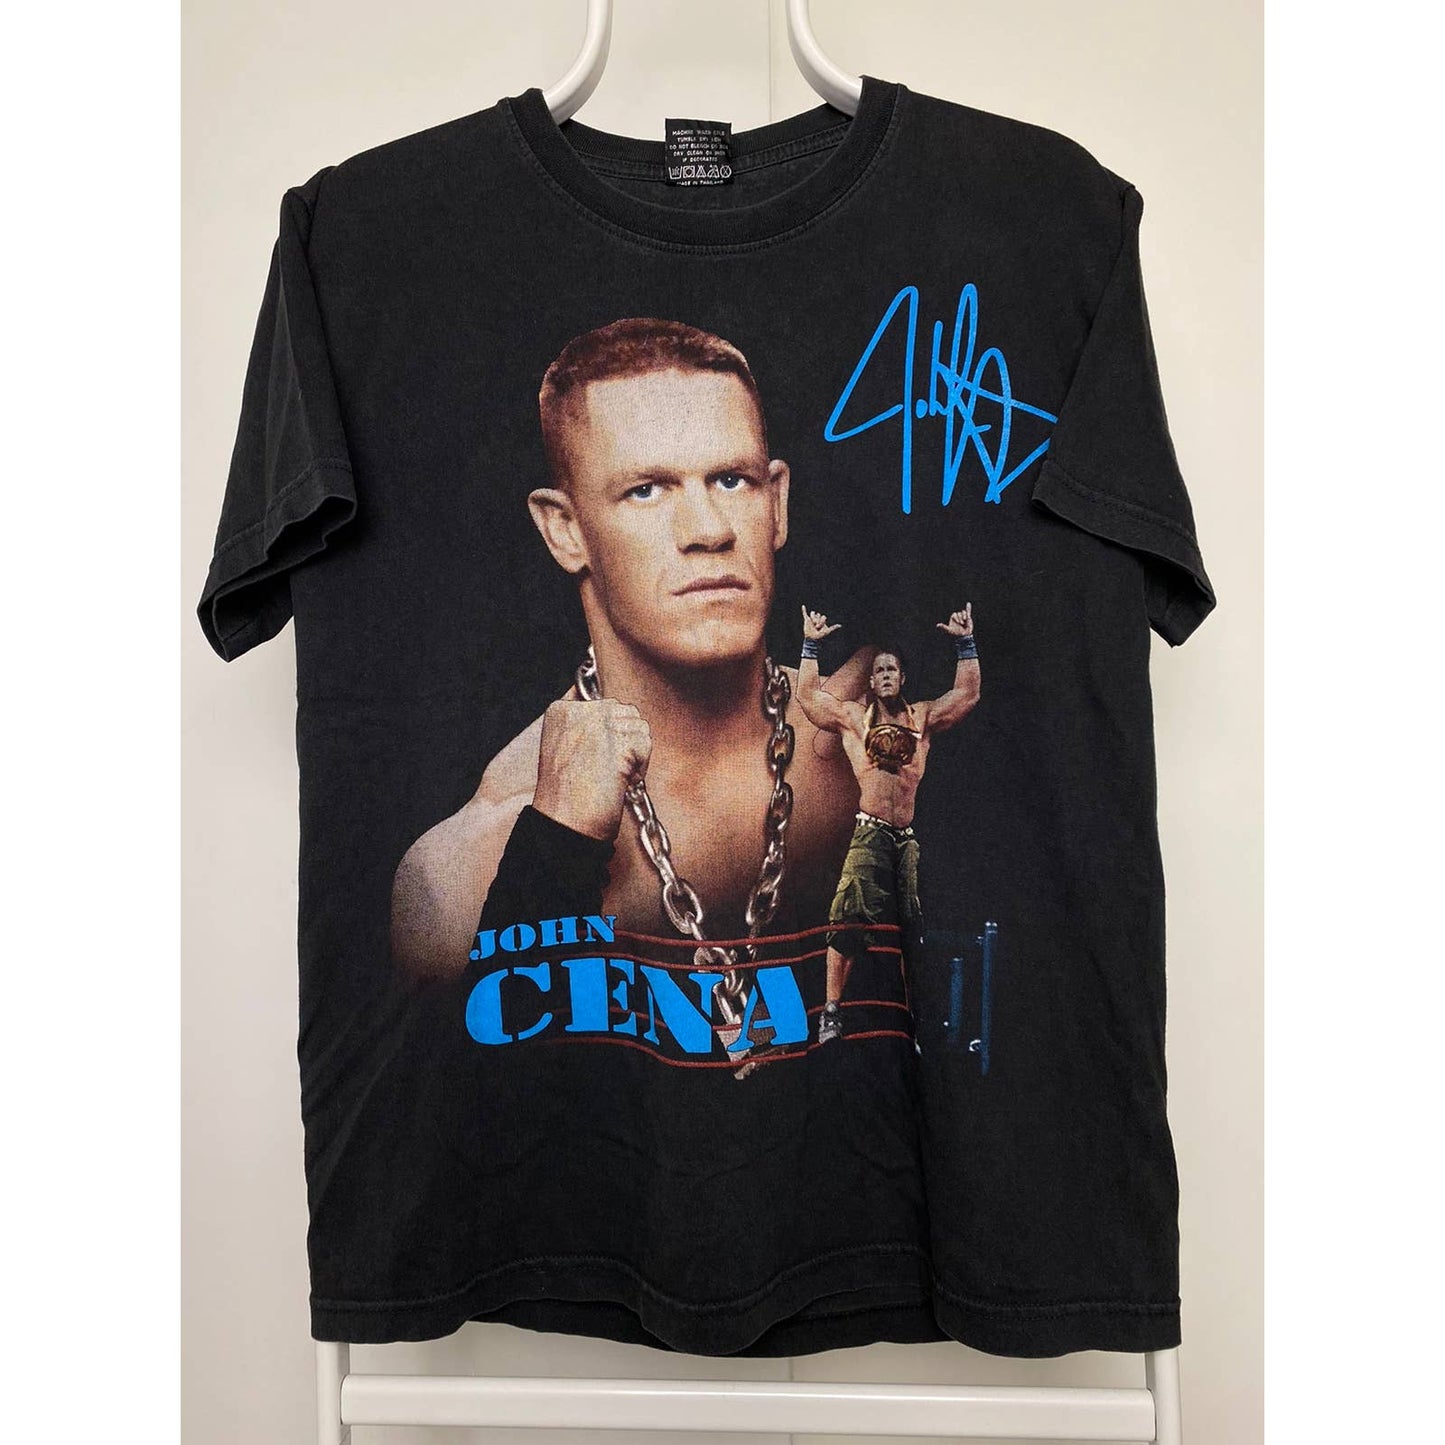 WWE John Cena signature vintage black T-shirt WWF Wrestling